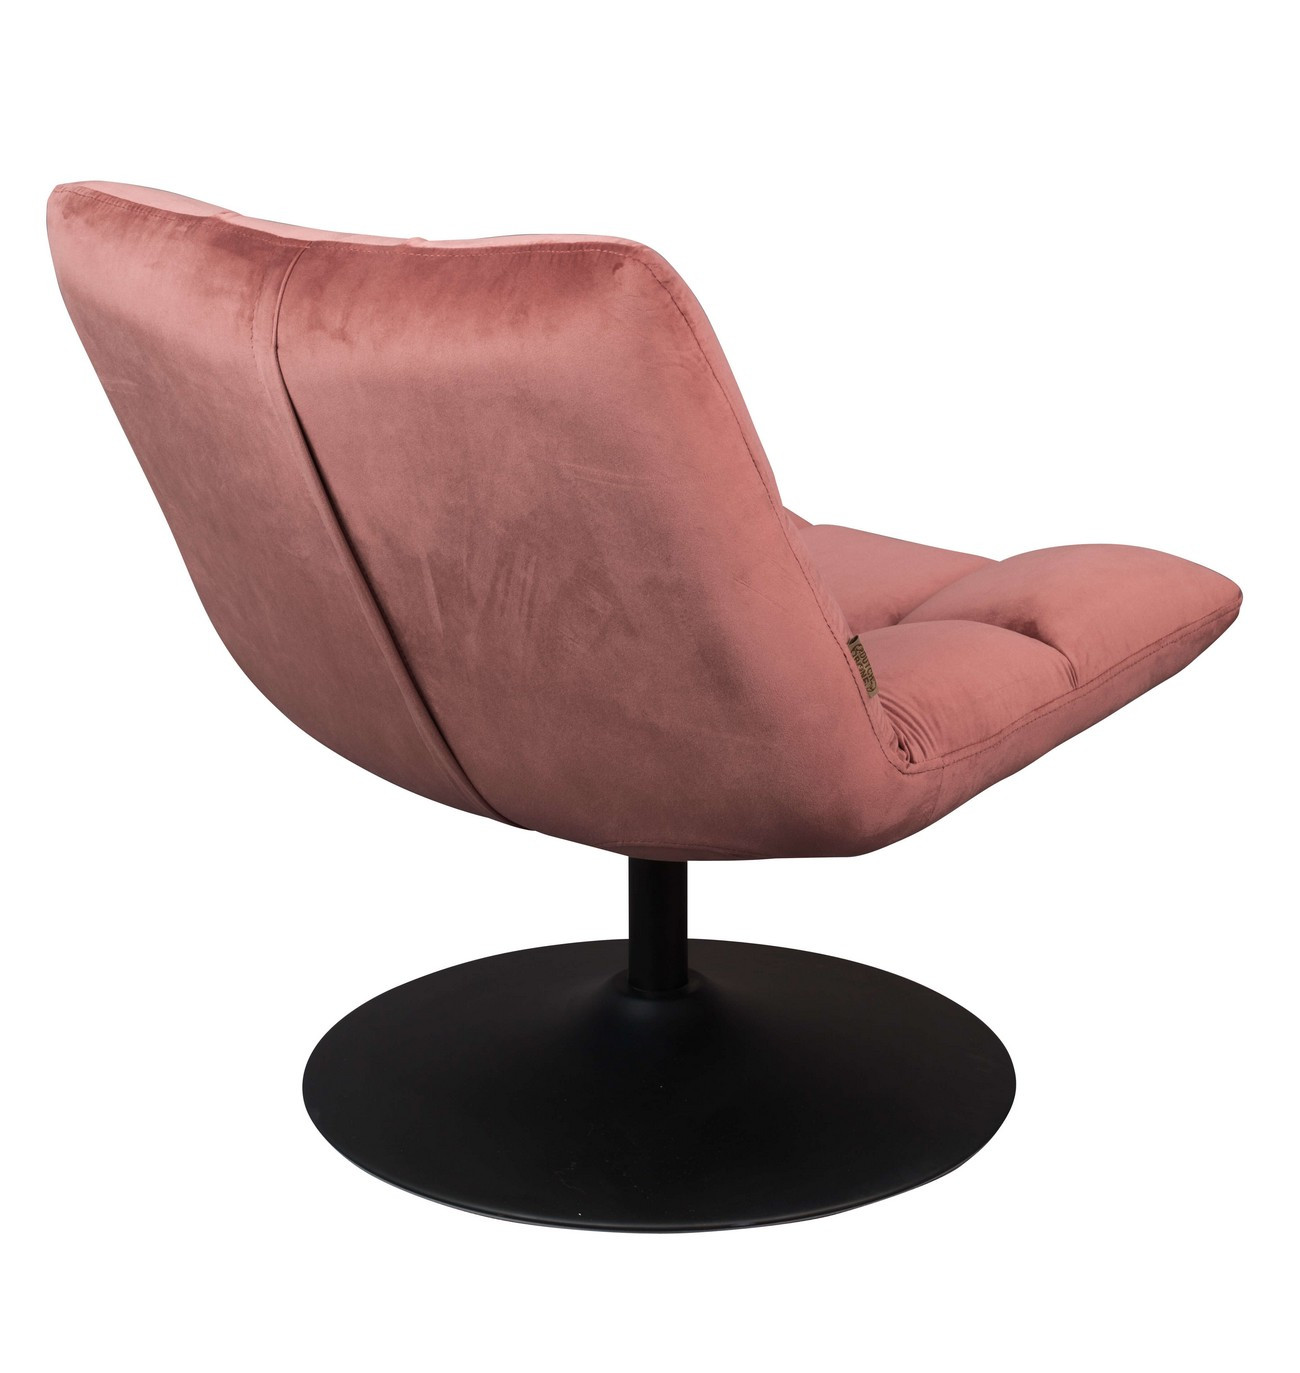 Pink lounge chair by Dutchbone